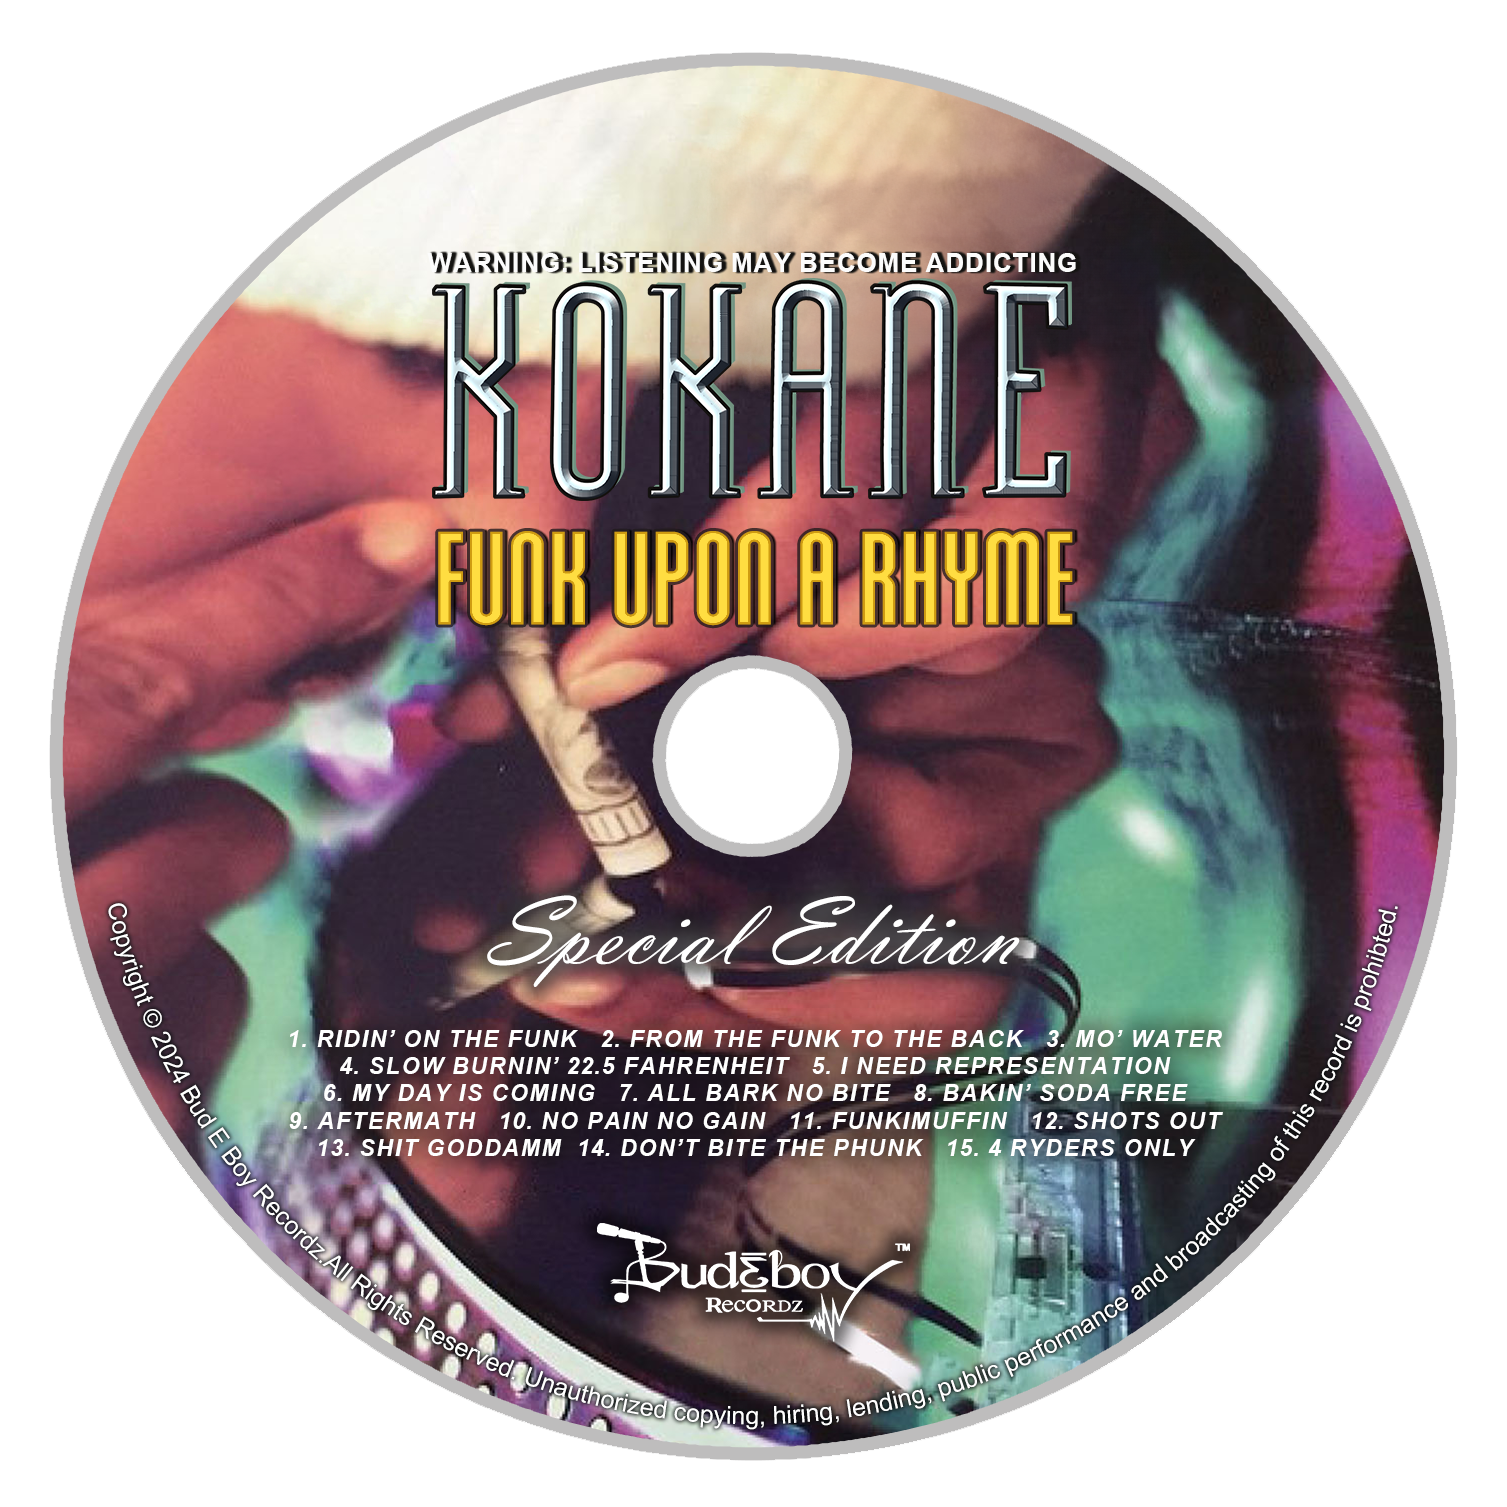 [PRE-ORDER] Funk Upon A Rhyme - Special Edition [Album CD]